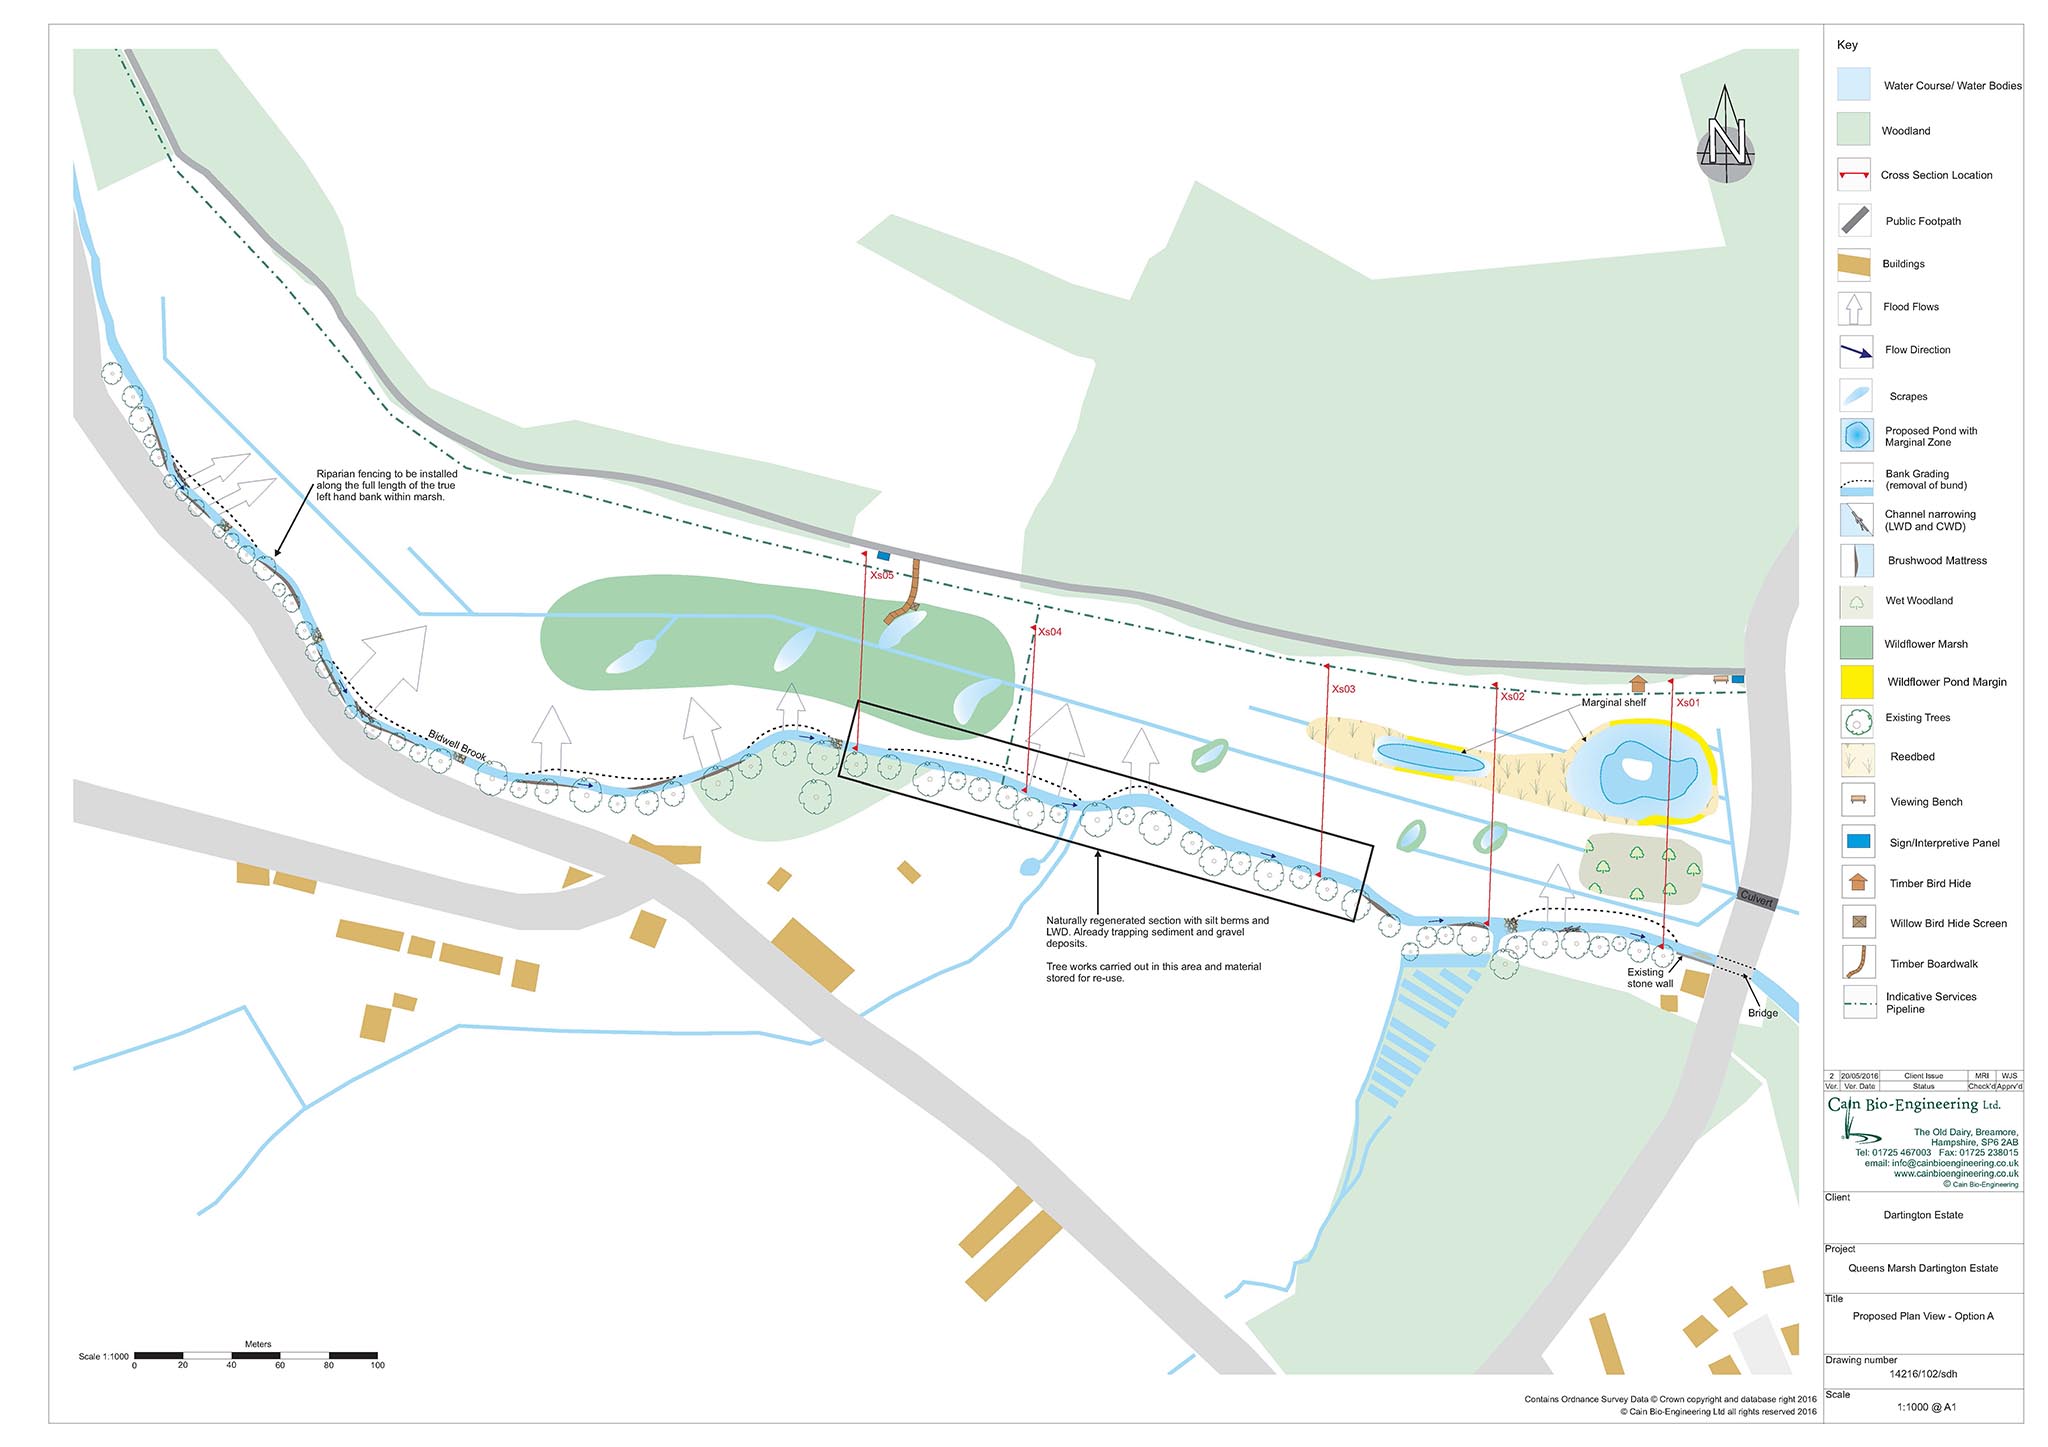 Proposed Plan View for Queen's Marsh development